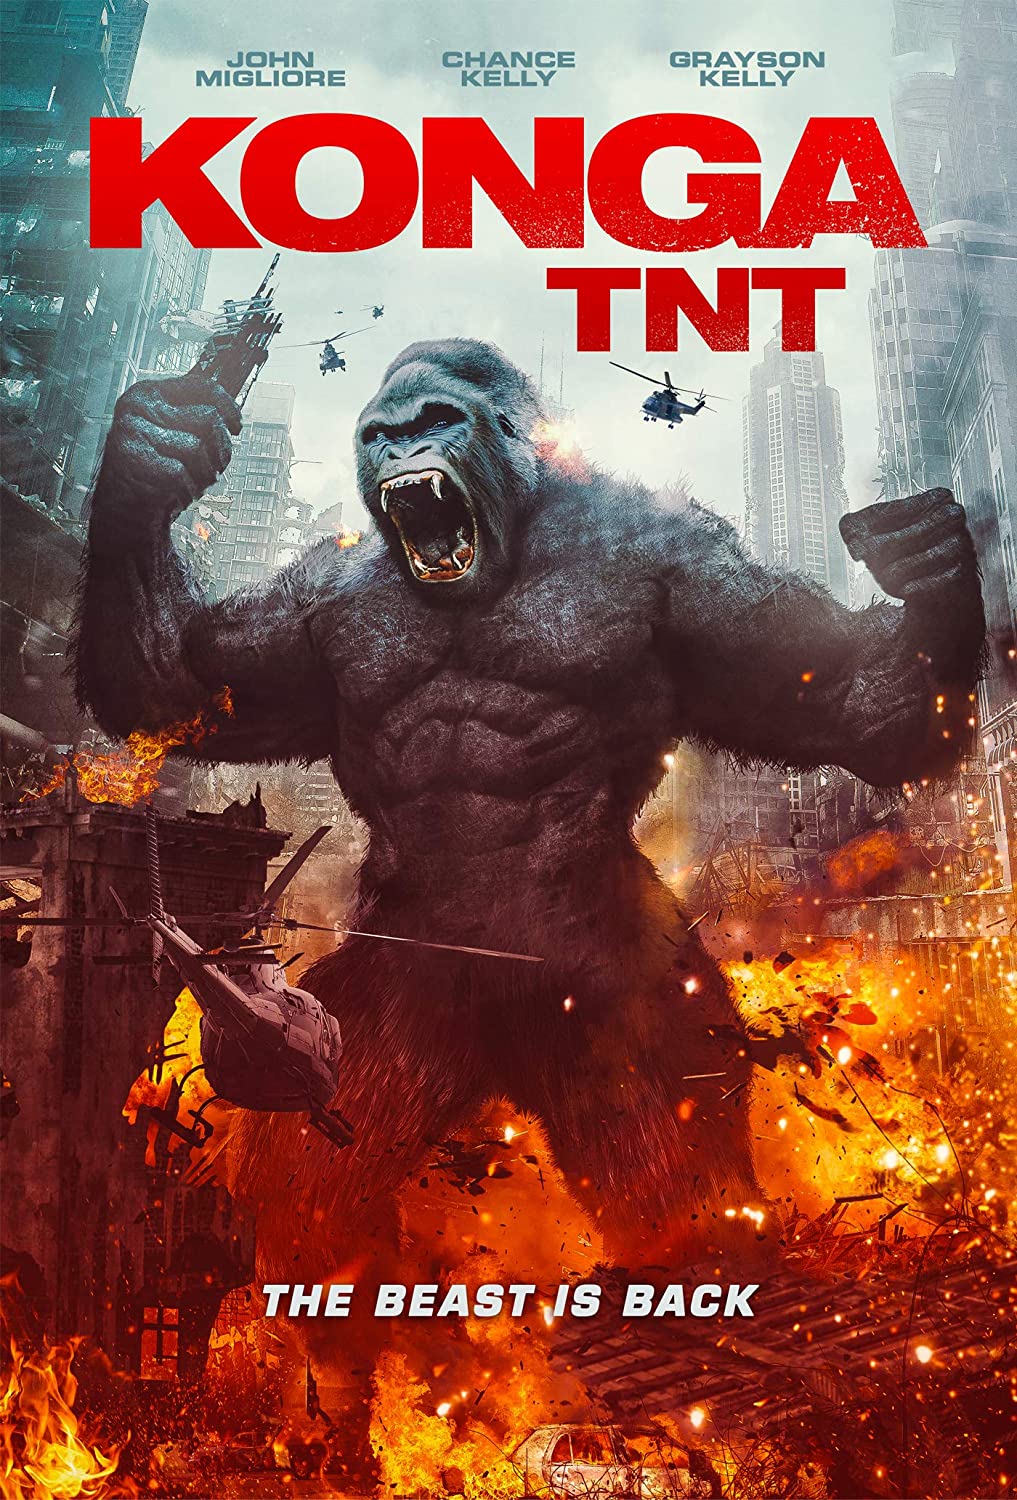 Konga TNT DVD